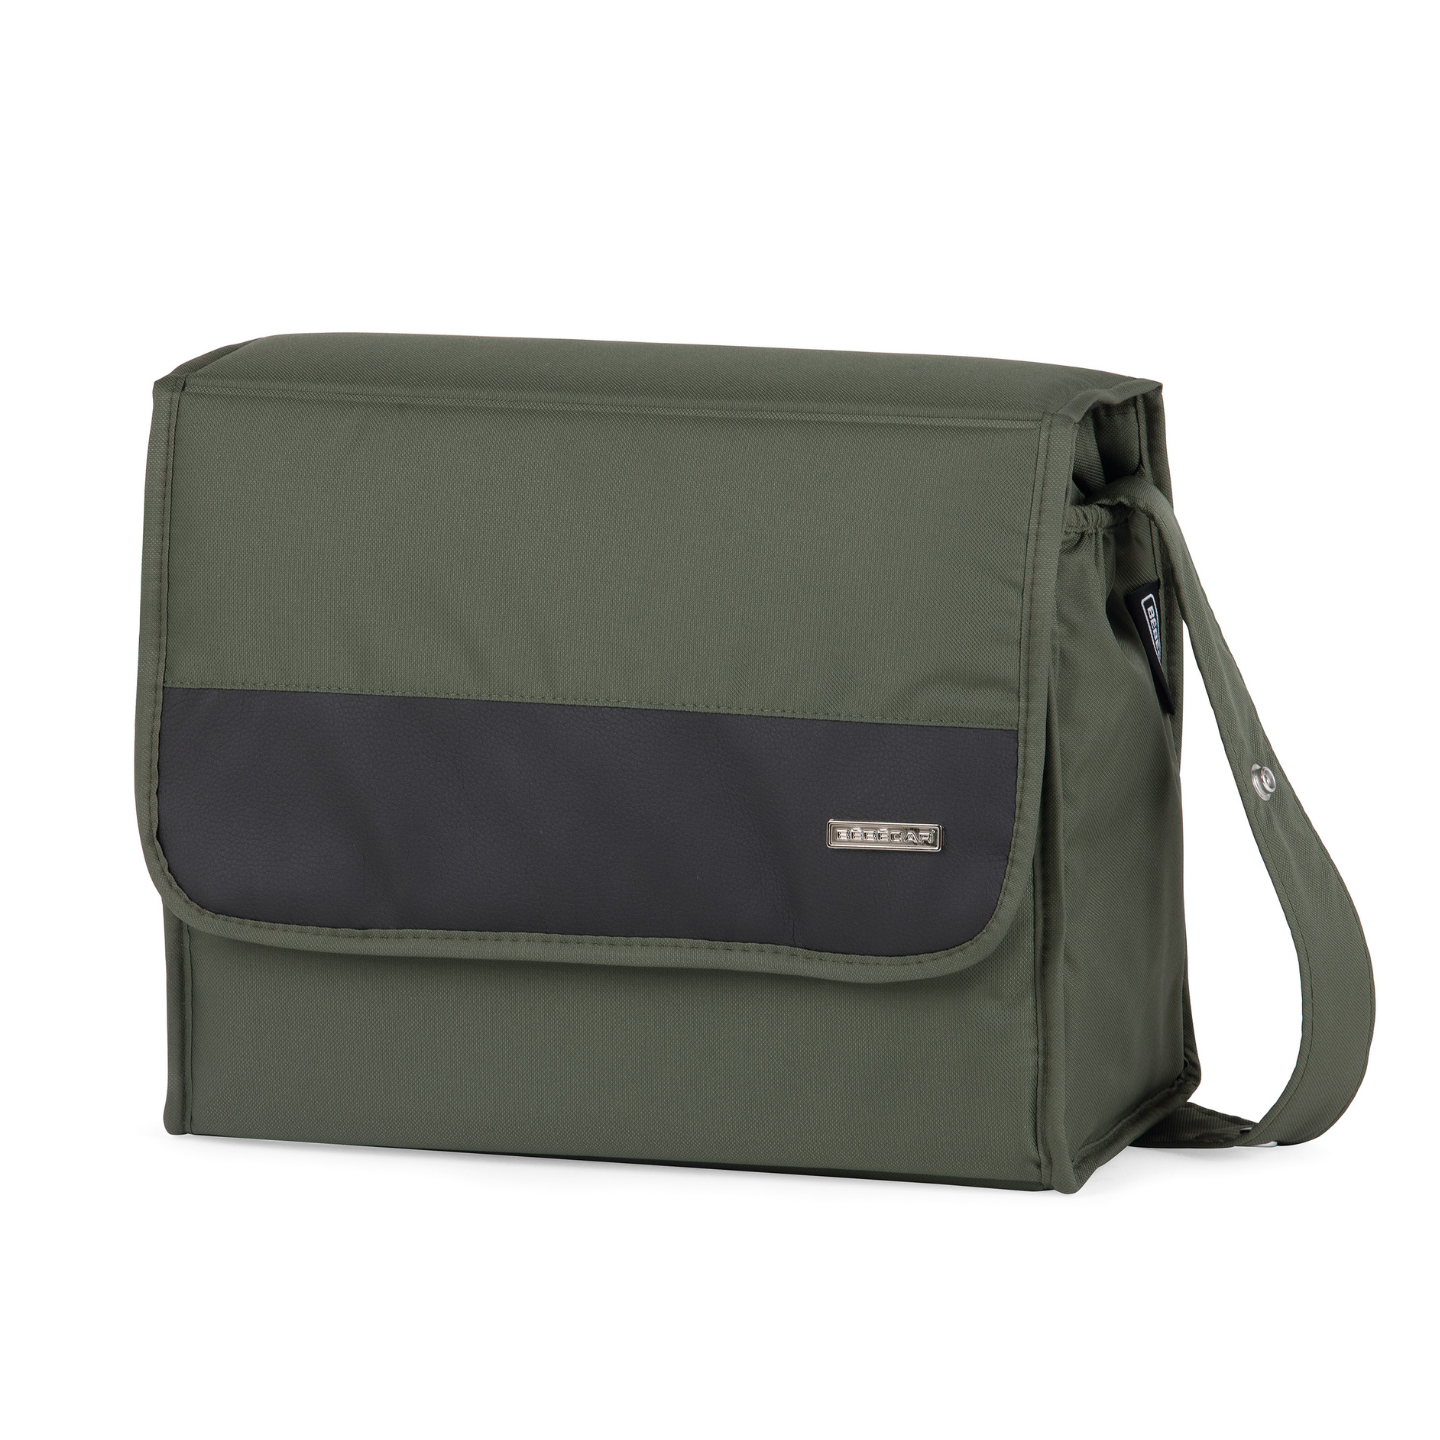 Bebecar Changing Bag Carre (Square) - Soft Green (334)